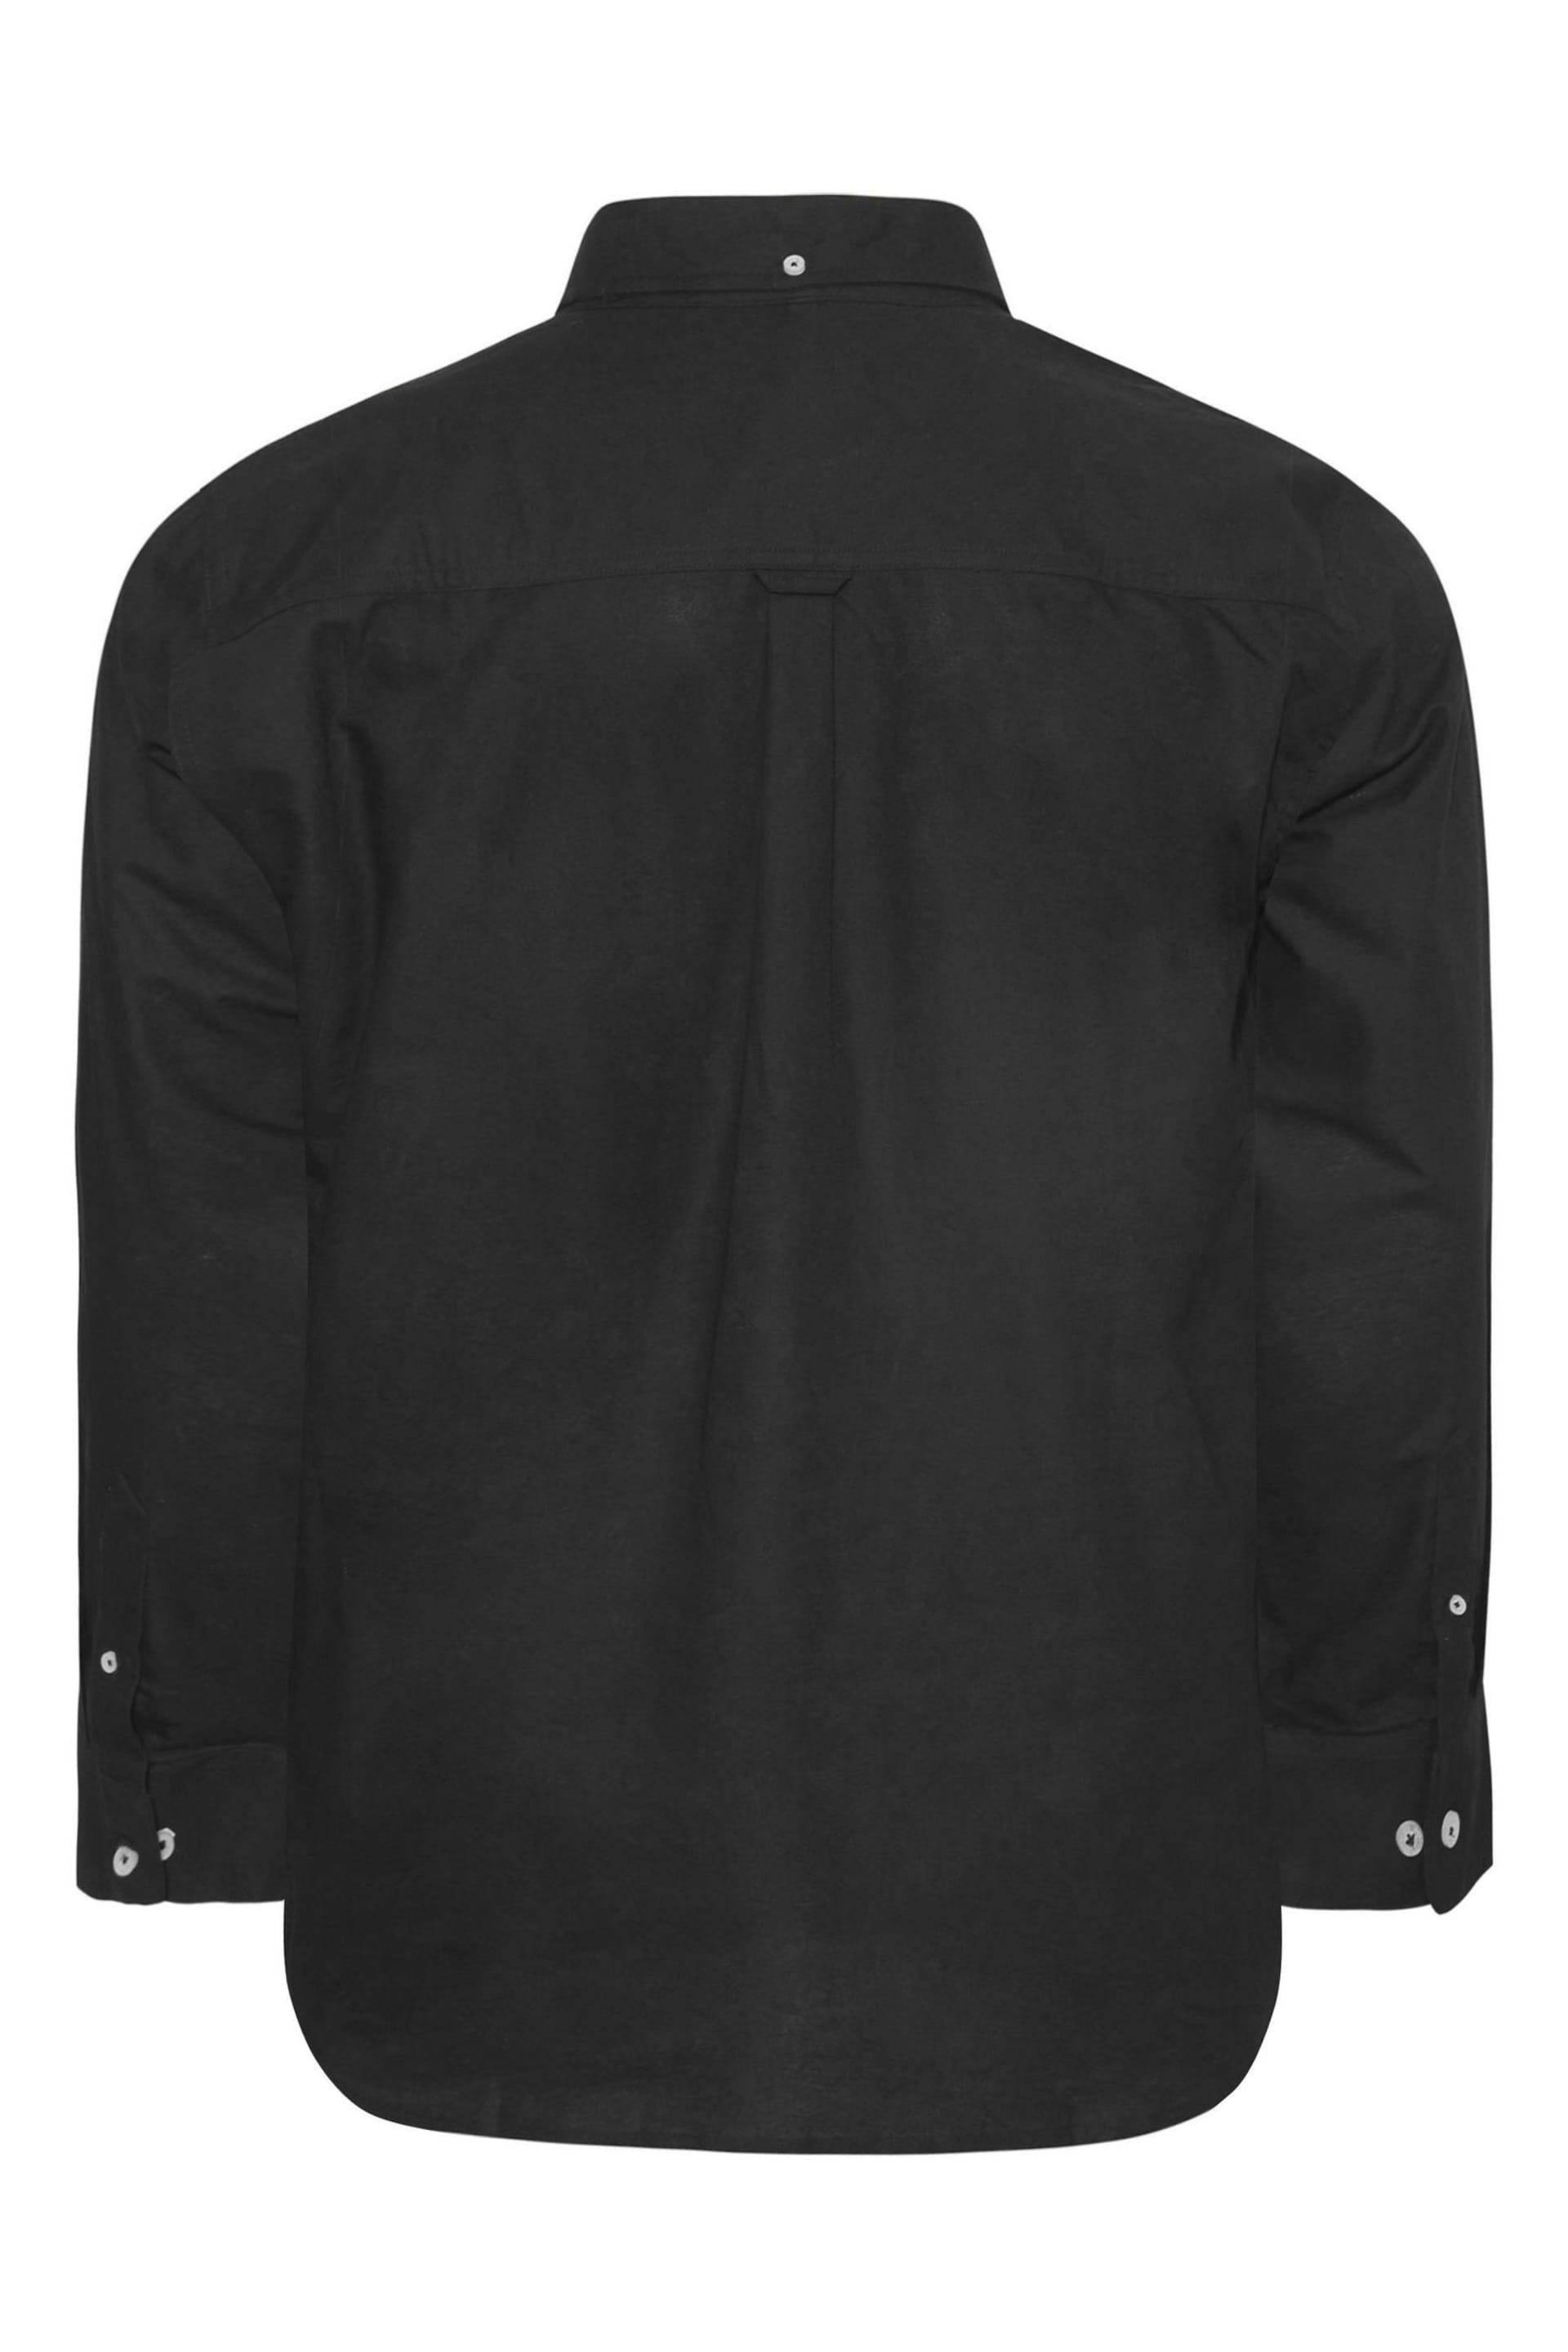 BadRhino Big & Tall Black Long Sleeve Shirt - Image 3 of 3